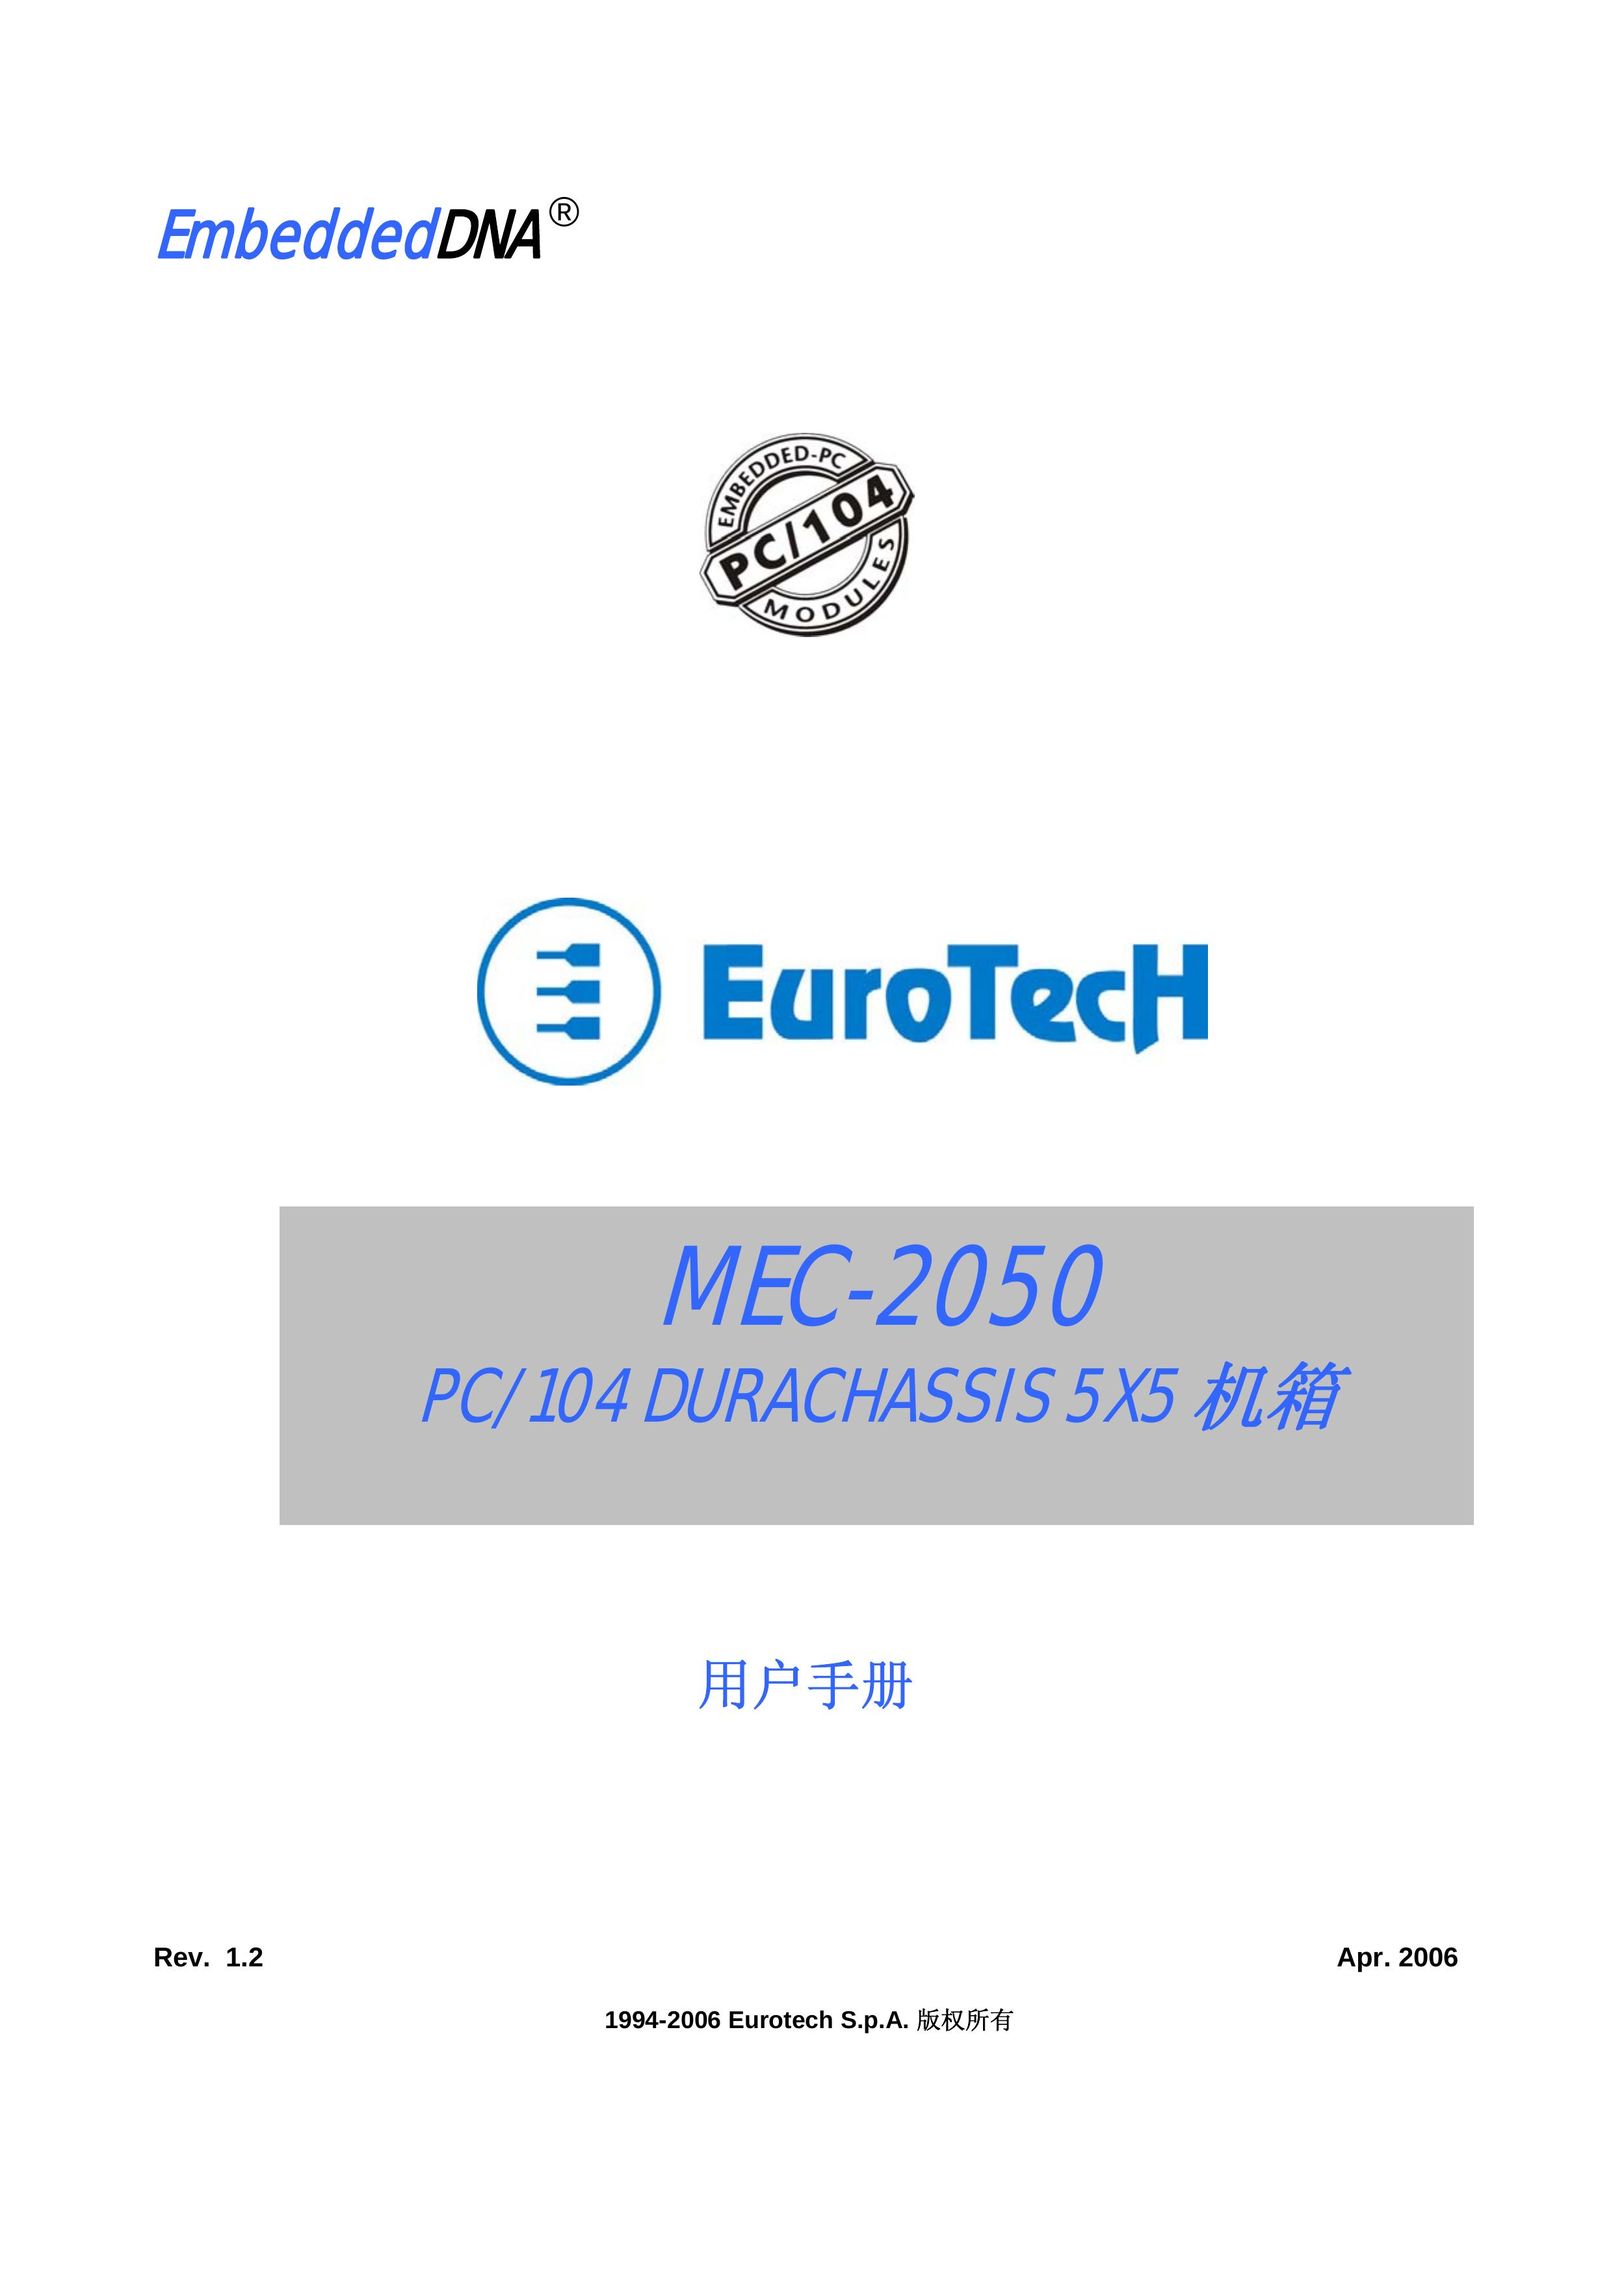 Eurotech Appliances PC 104 Computer Hardware User Manual